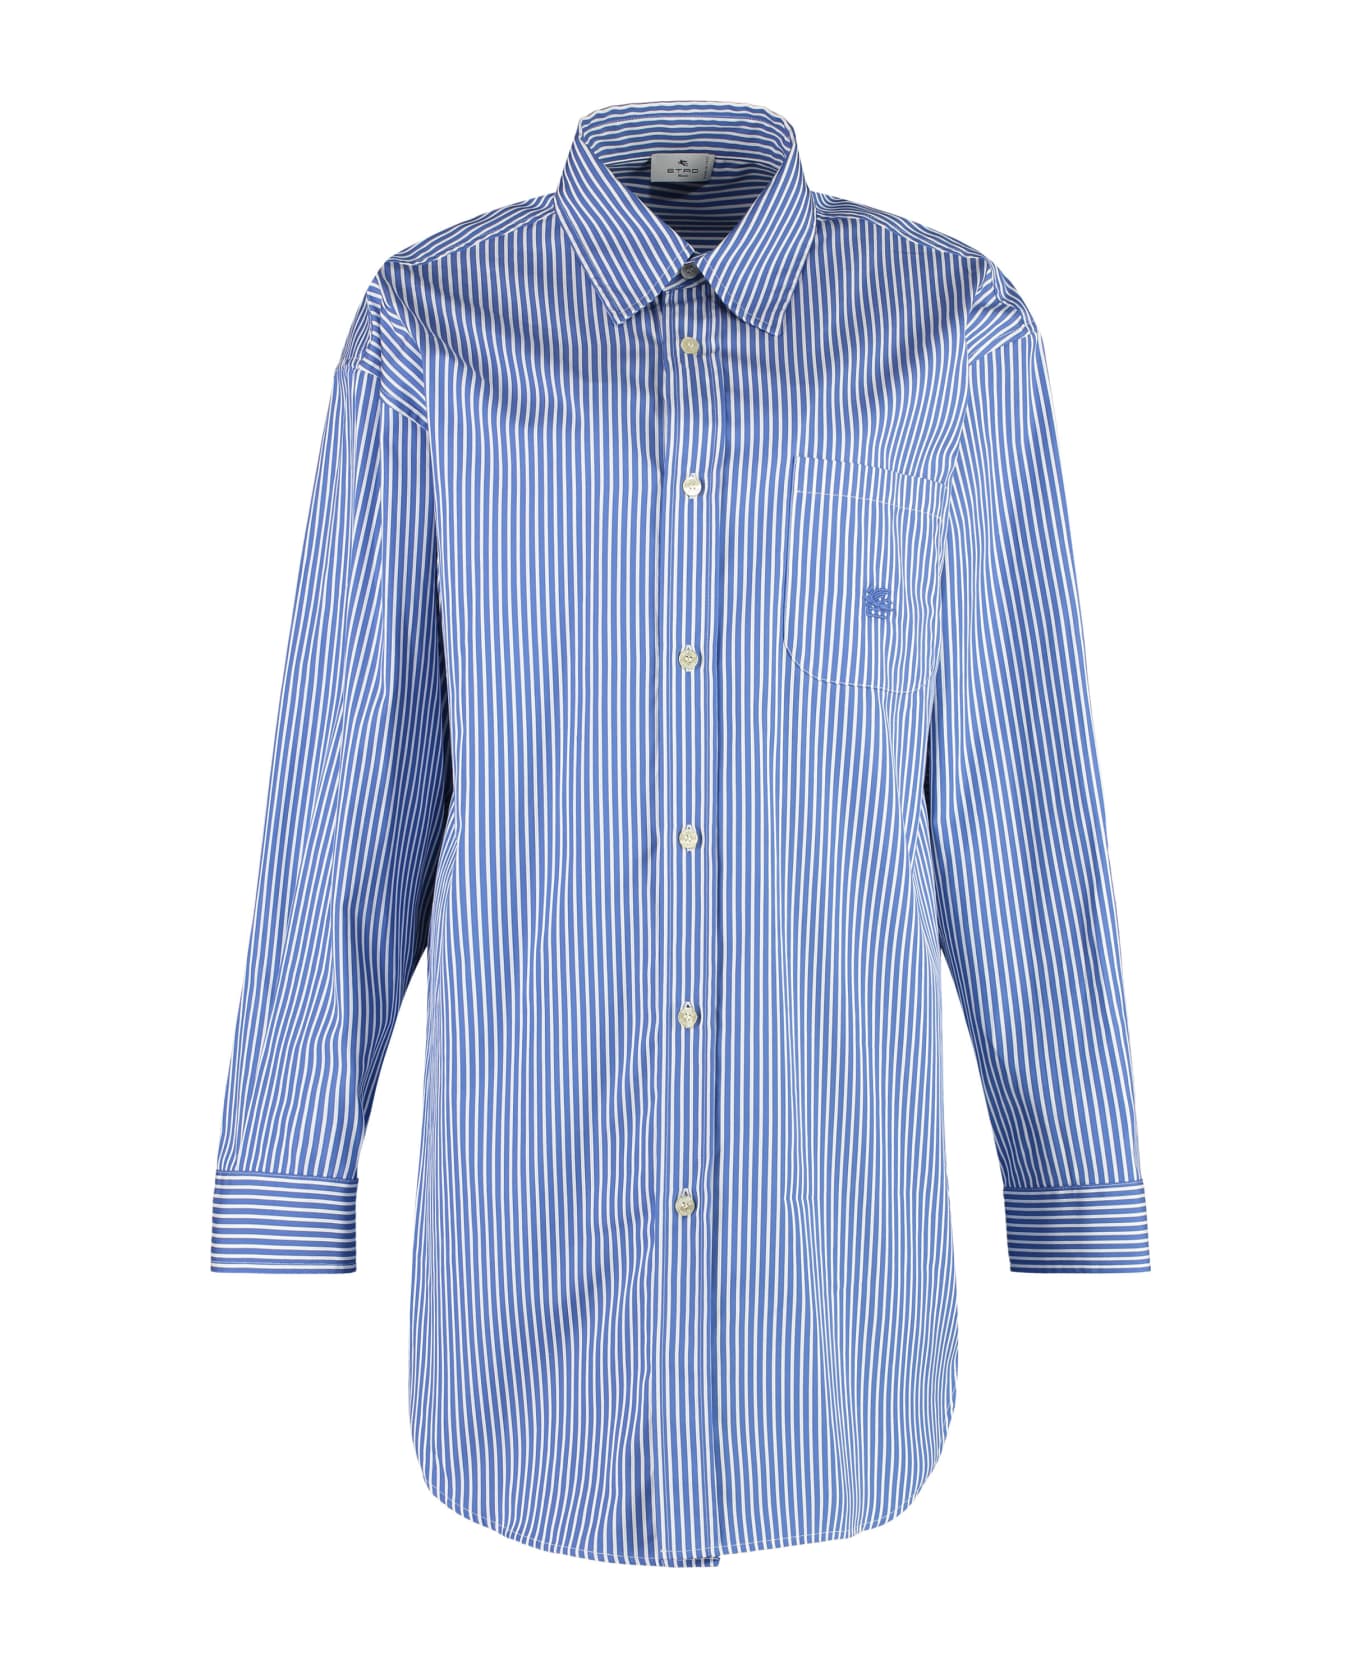 Etro Striped Cotton Shirt - blue